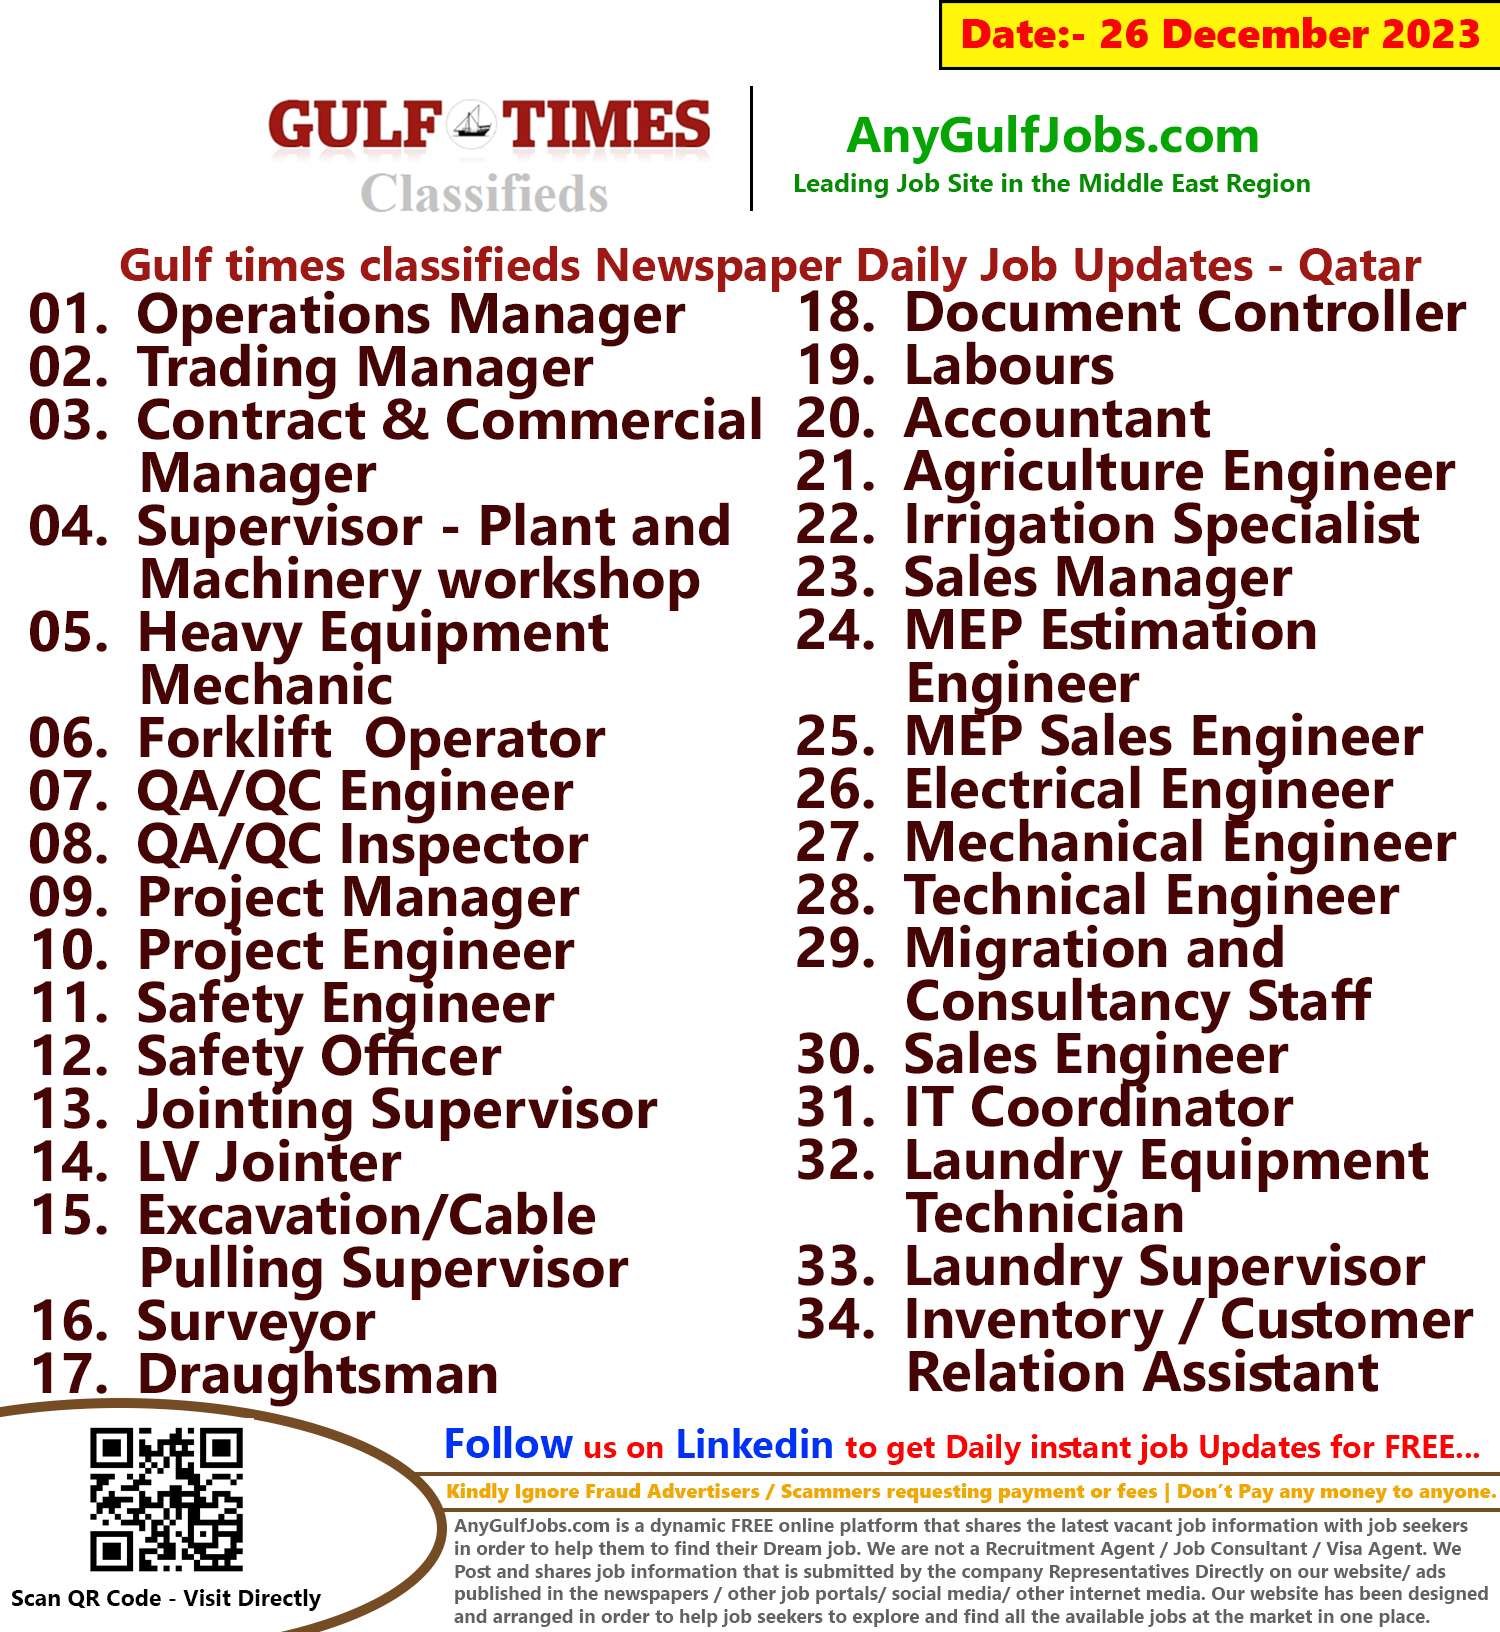 Gulf Times Classifieds Job Vacancies Qatar - 26 December 2023